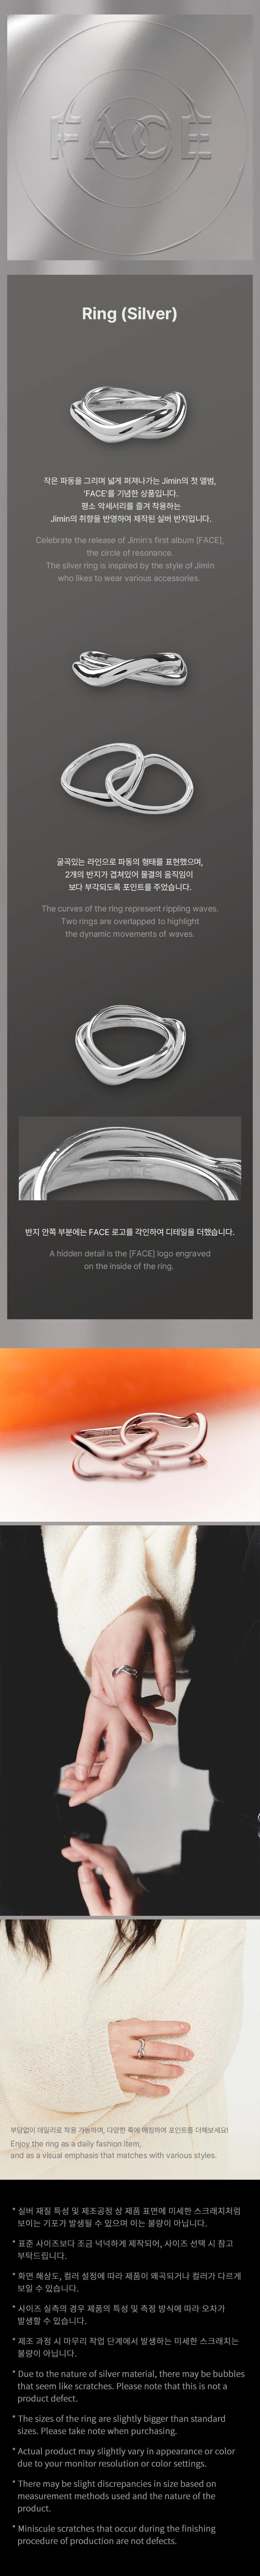 JIMIN [FACE] Ring (Silver)